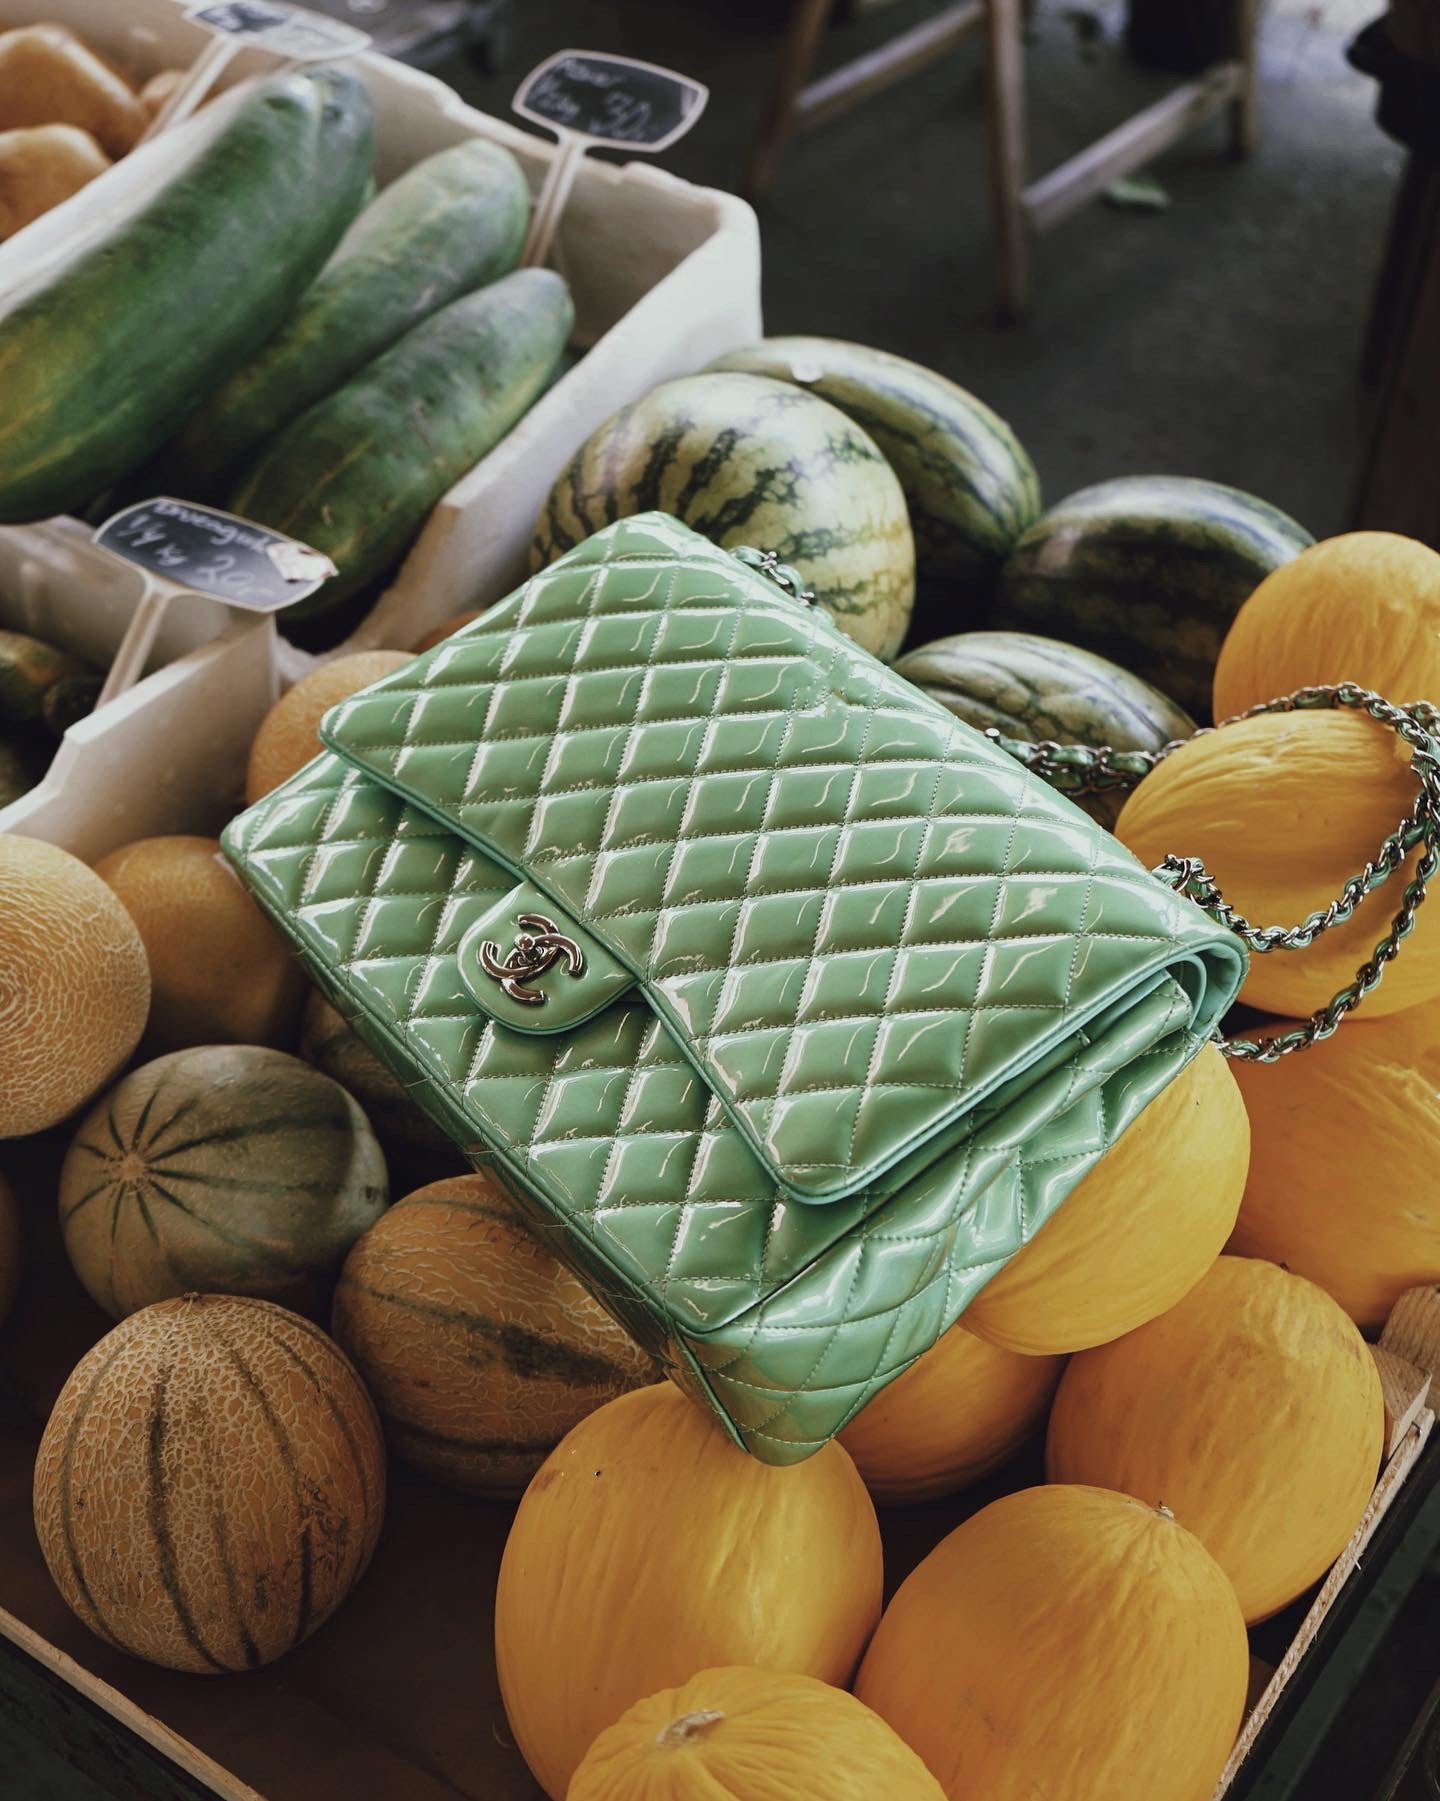 Chanel lime green patent jumbo double flap bag